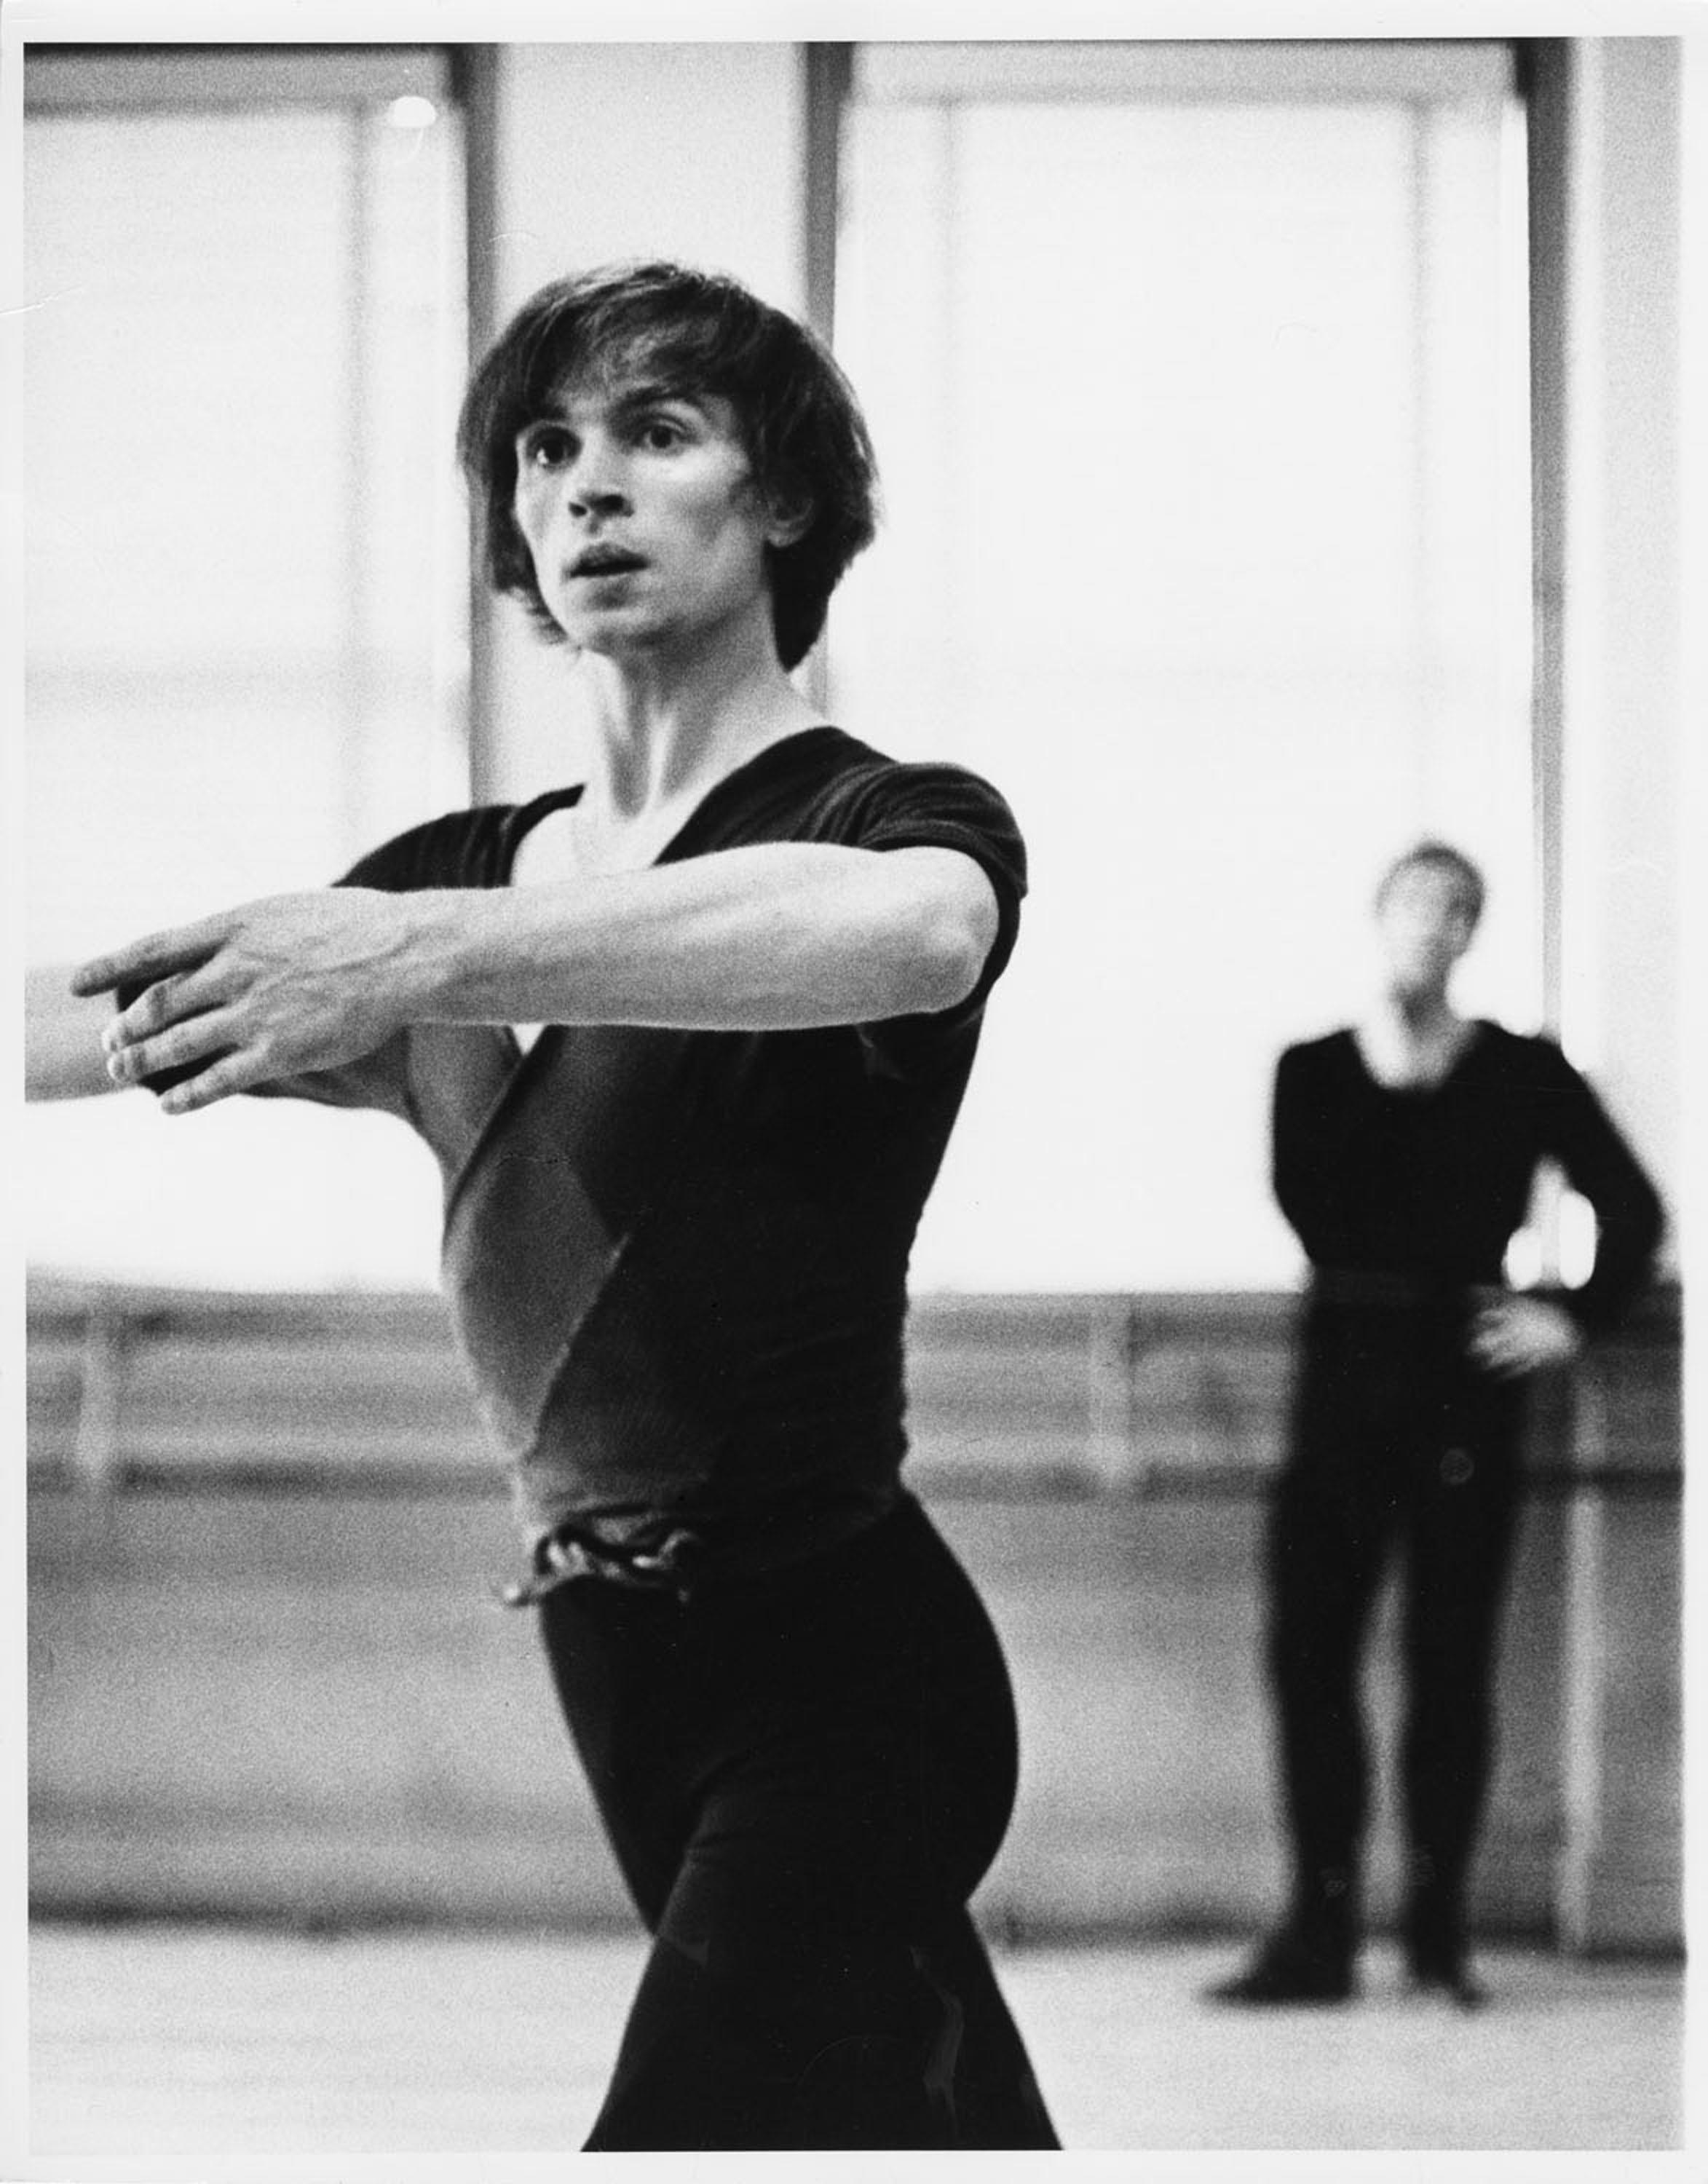 Jack Mitchell Black and White Photograph - Rudolf Nureyev in dance class, January 20, 1965.